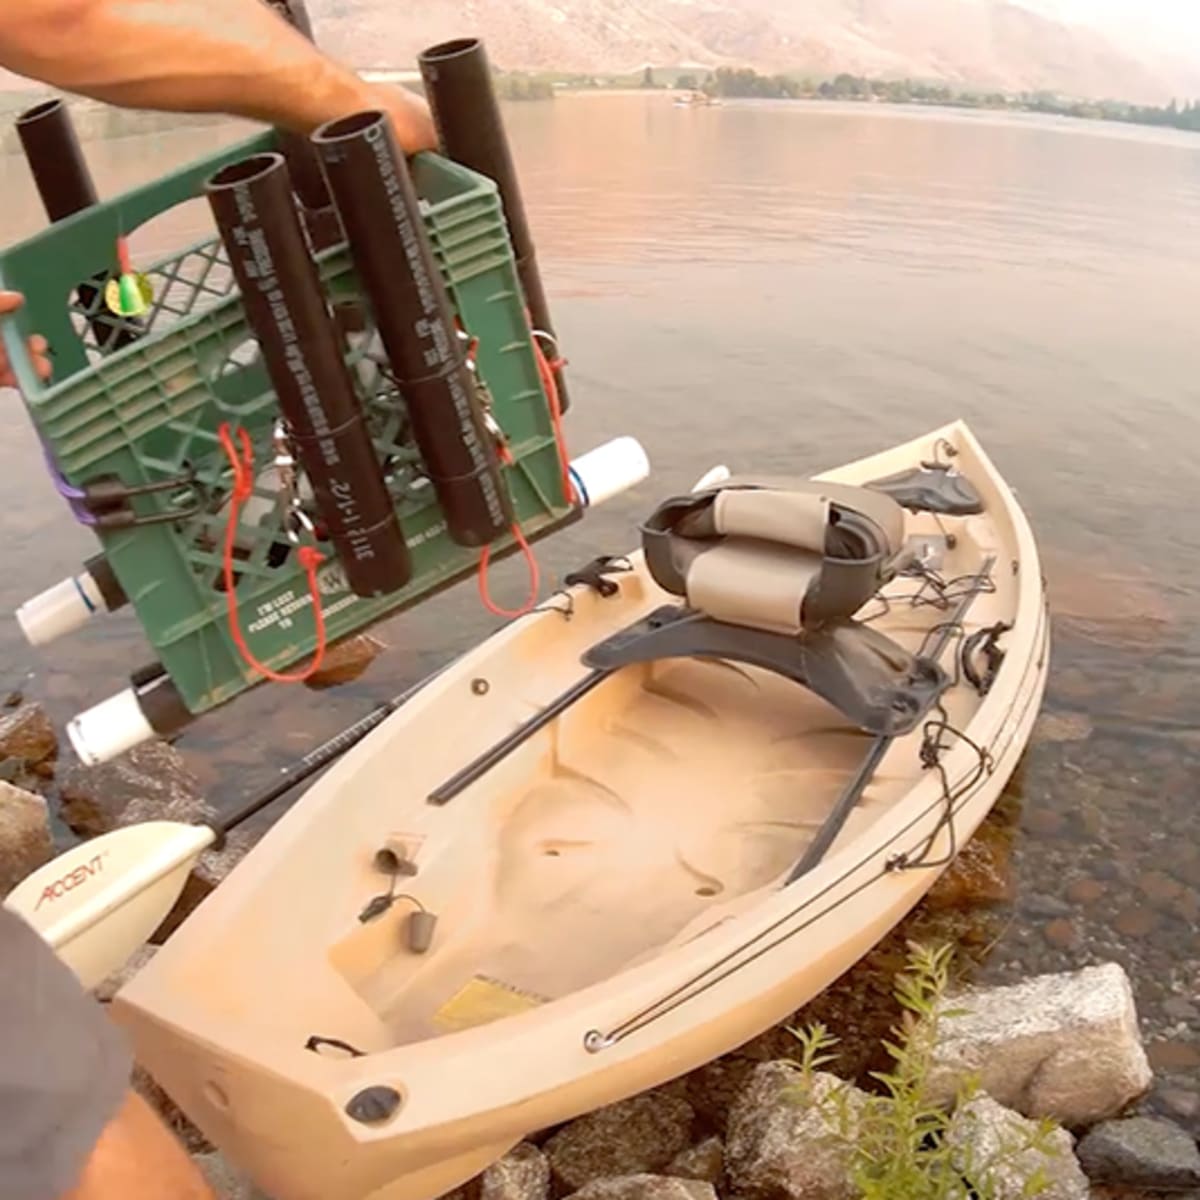 Milk crates can perform many tasks for kayak fishermen